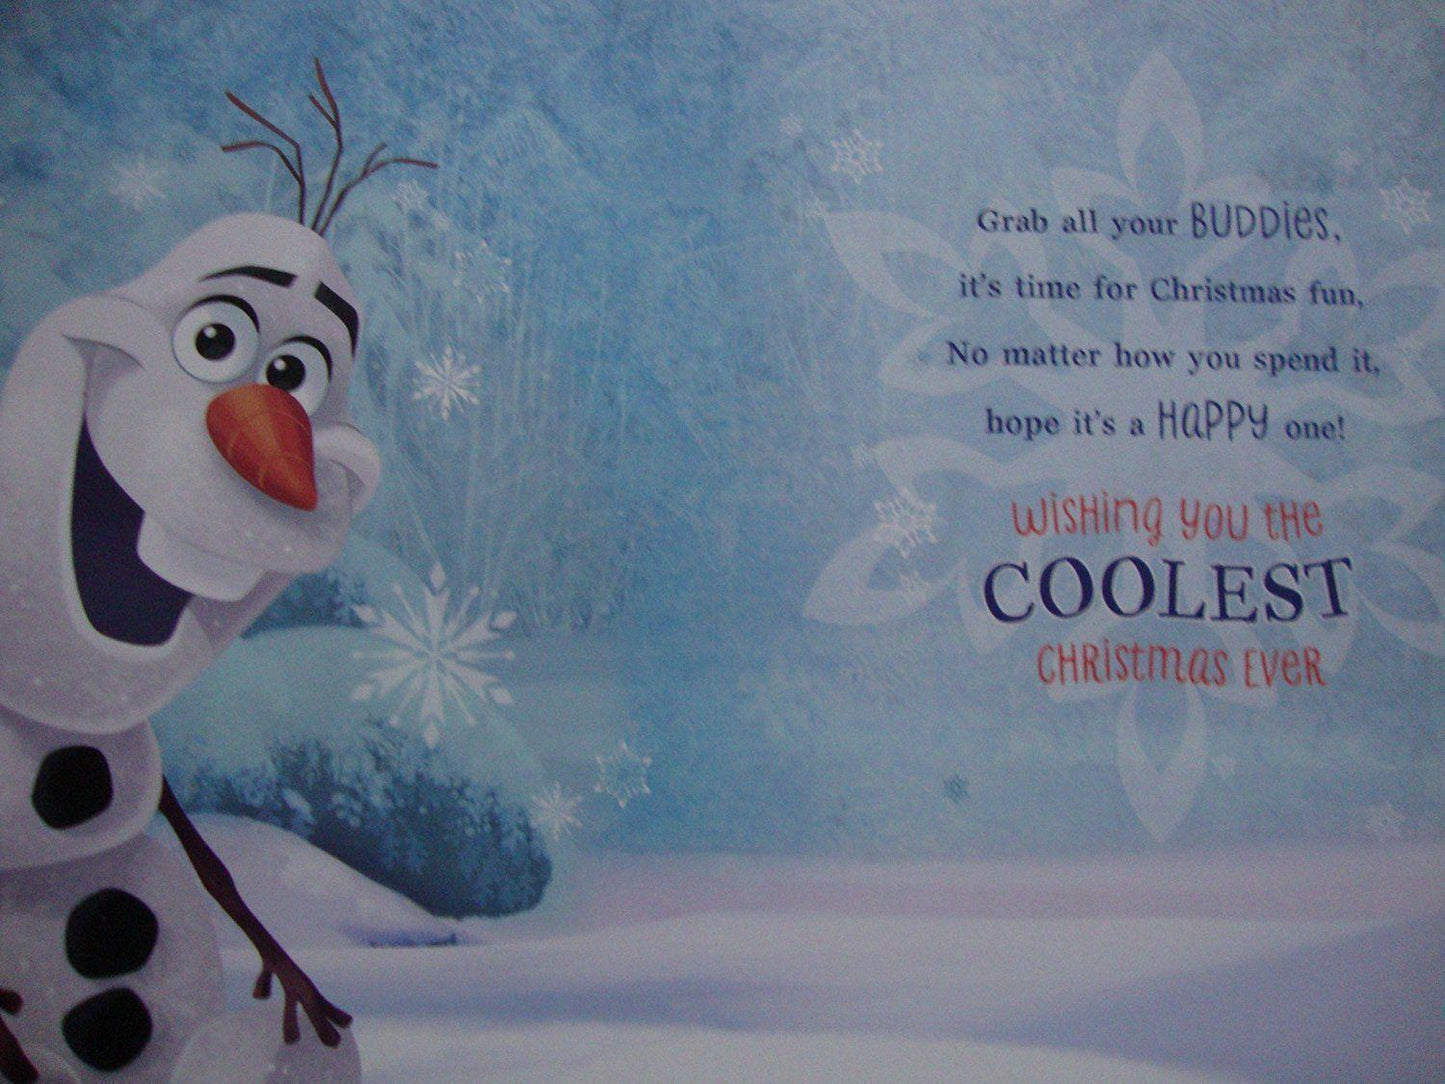 Nephew Frozen Disney Winter Wishes Christmas Greeting Card